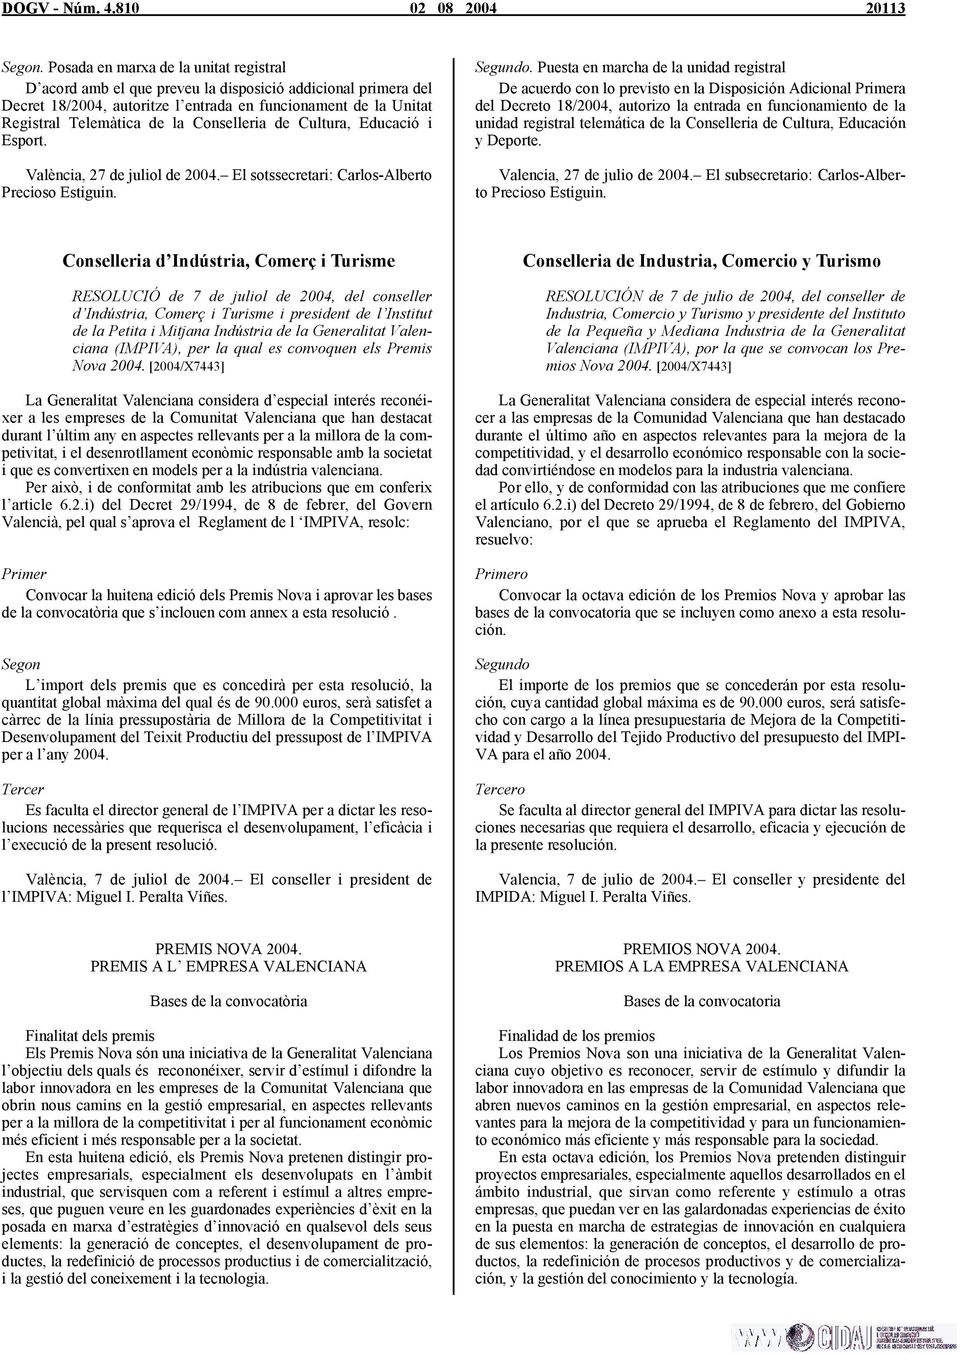 Conselleria de Cultura, Educació i Esport. València, 27 de juliol de 2004. El sotssecretari: Carlos-Alberto Precioso Estiguin. Segundo.